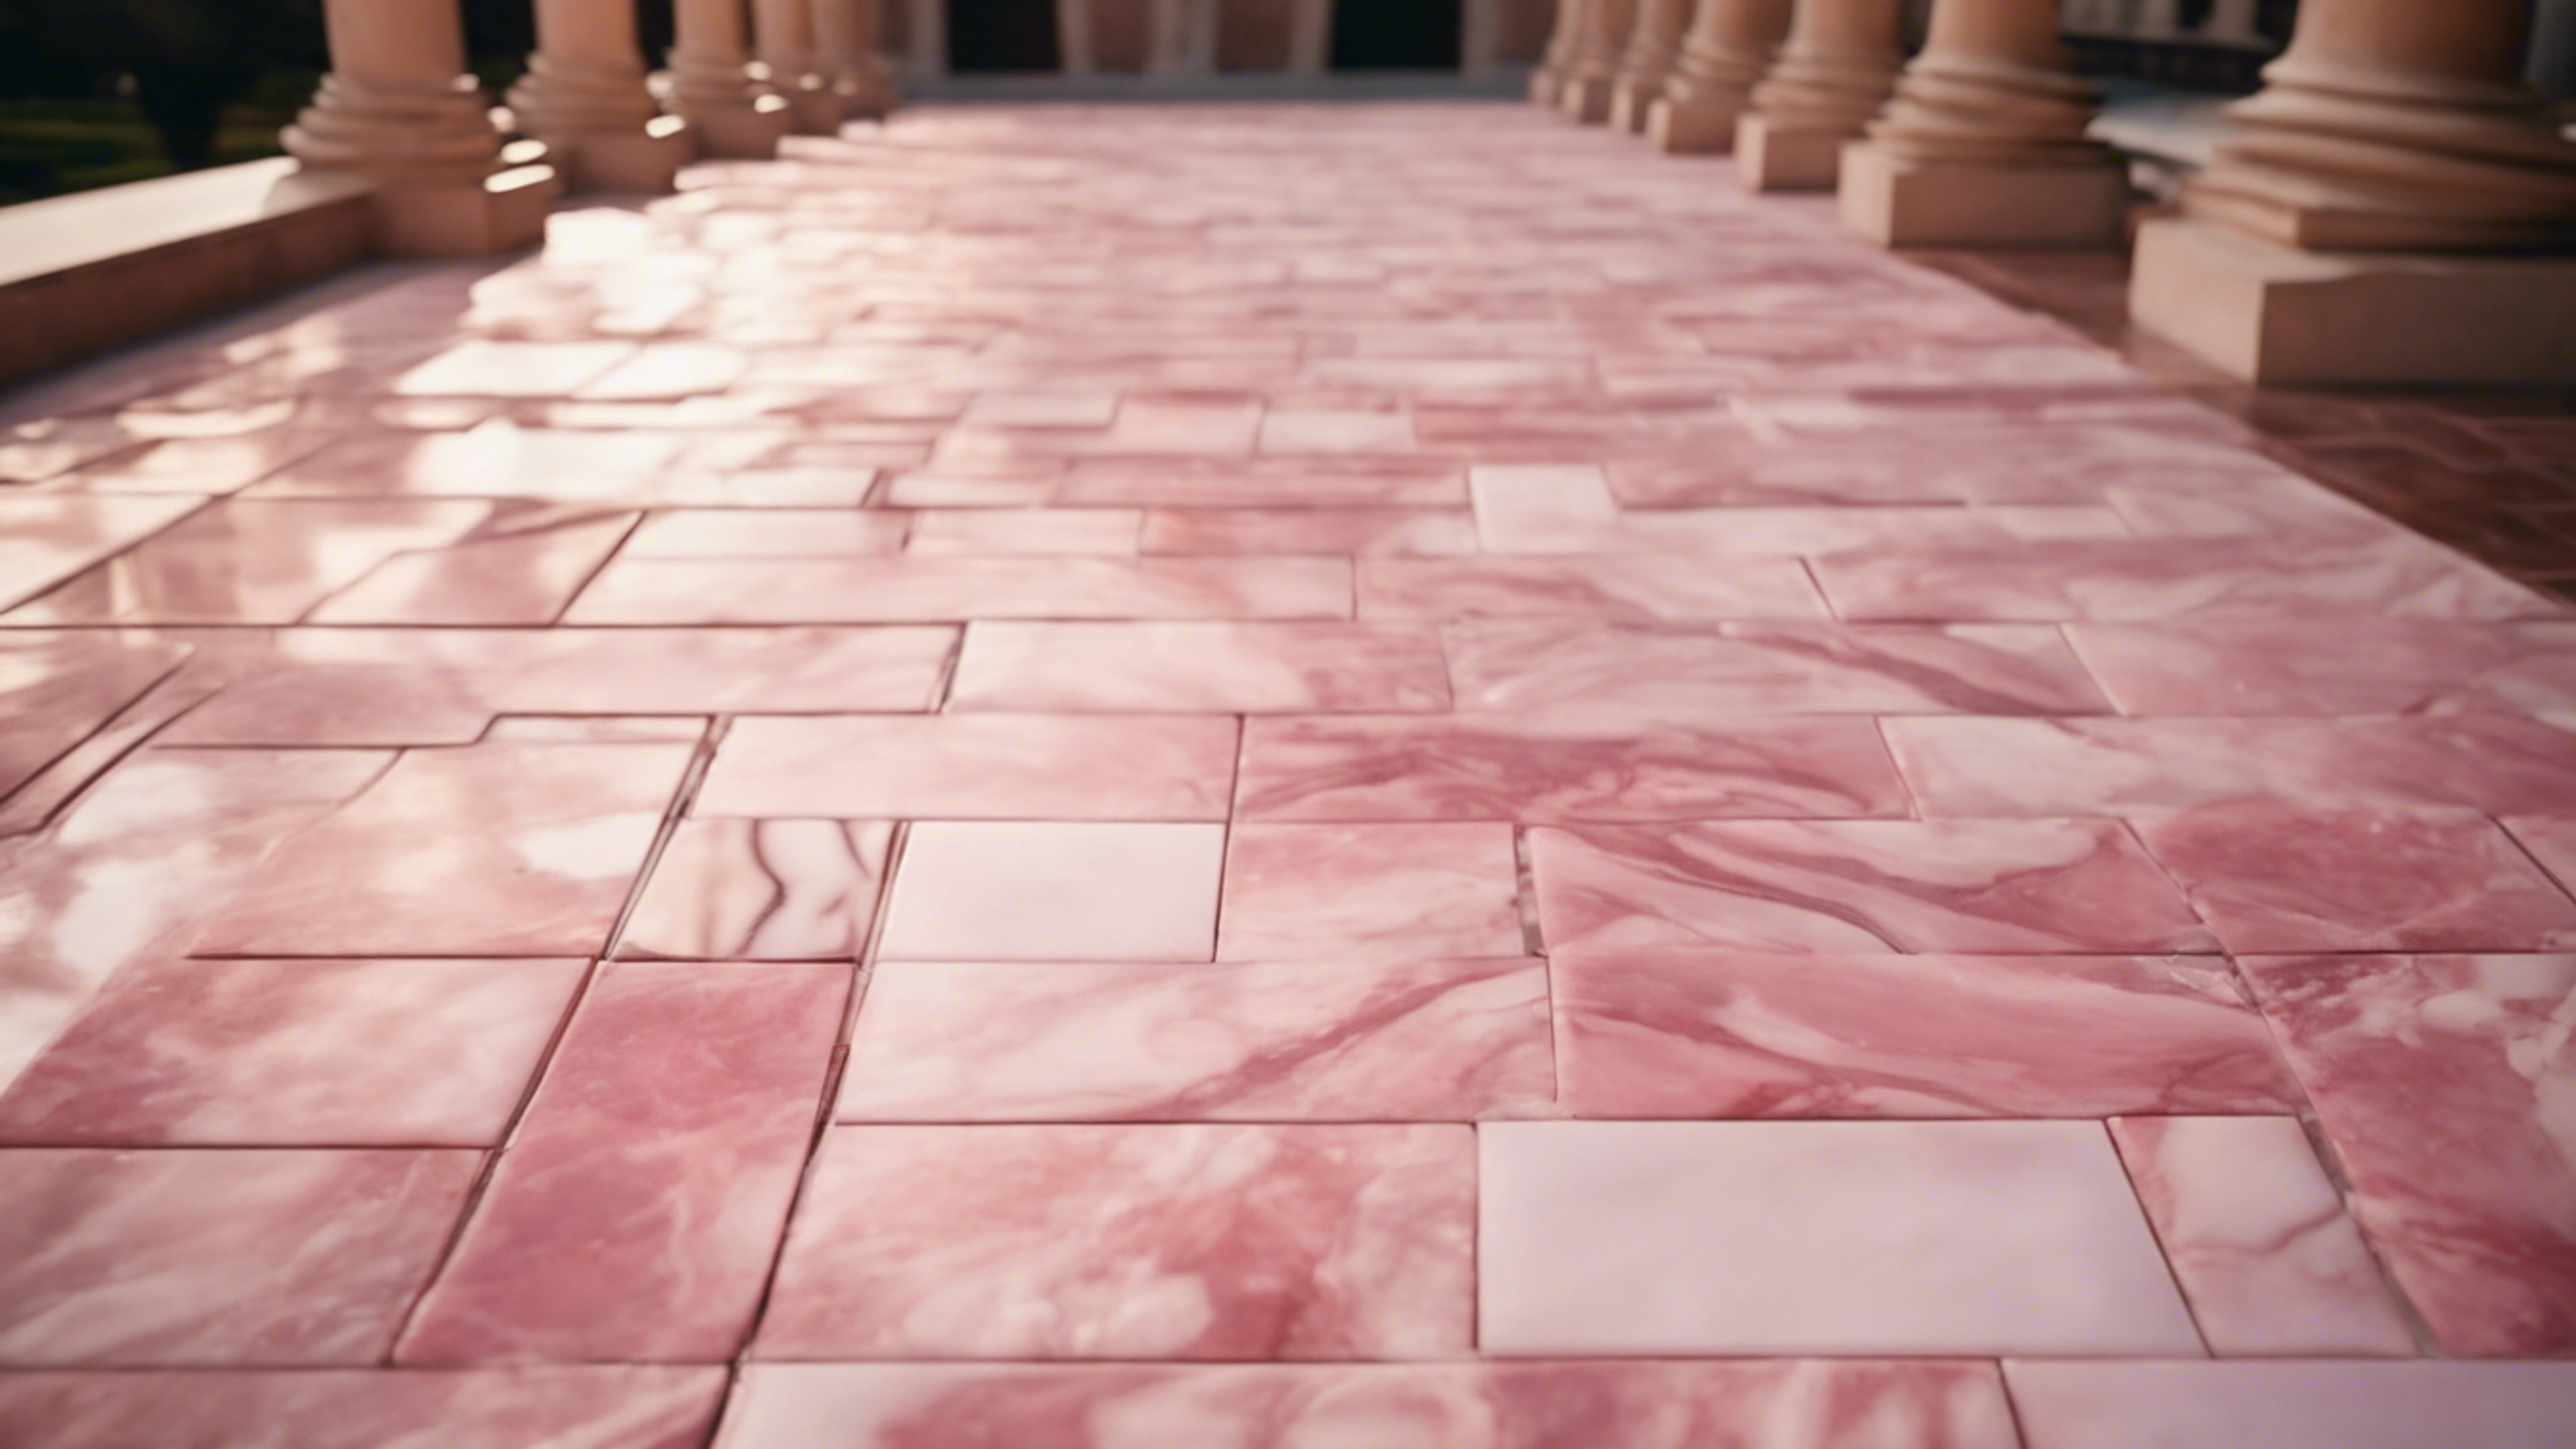 Sheets of pink marble laid down as a pathway in a lavish courtyard. duvar kağıdı[e576fda183b04be2be6f]